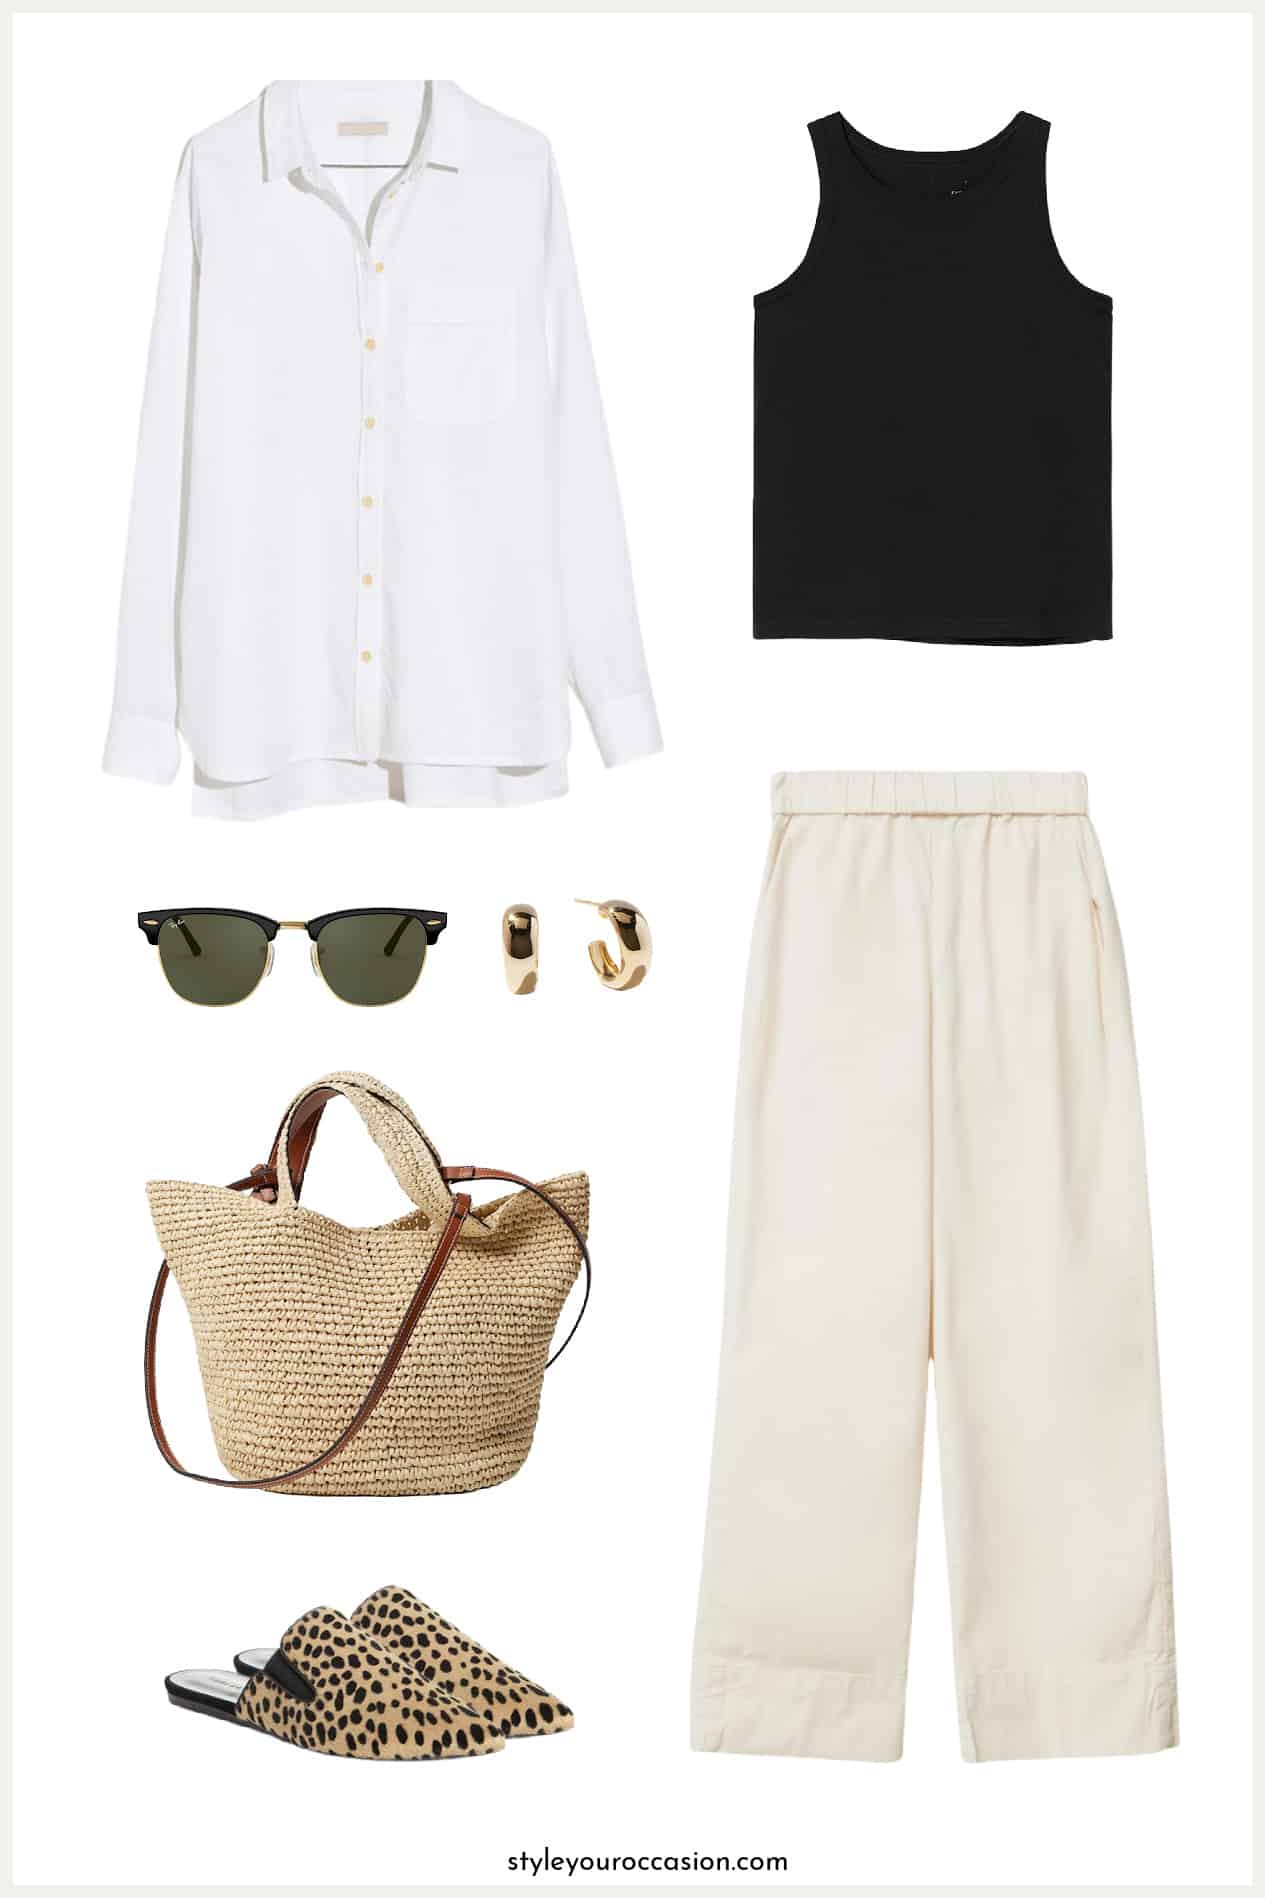 2023 Summer Capsule Wardrobe: Checklist + Effortless Outfits